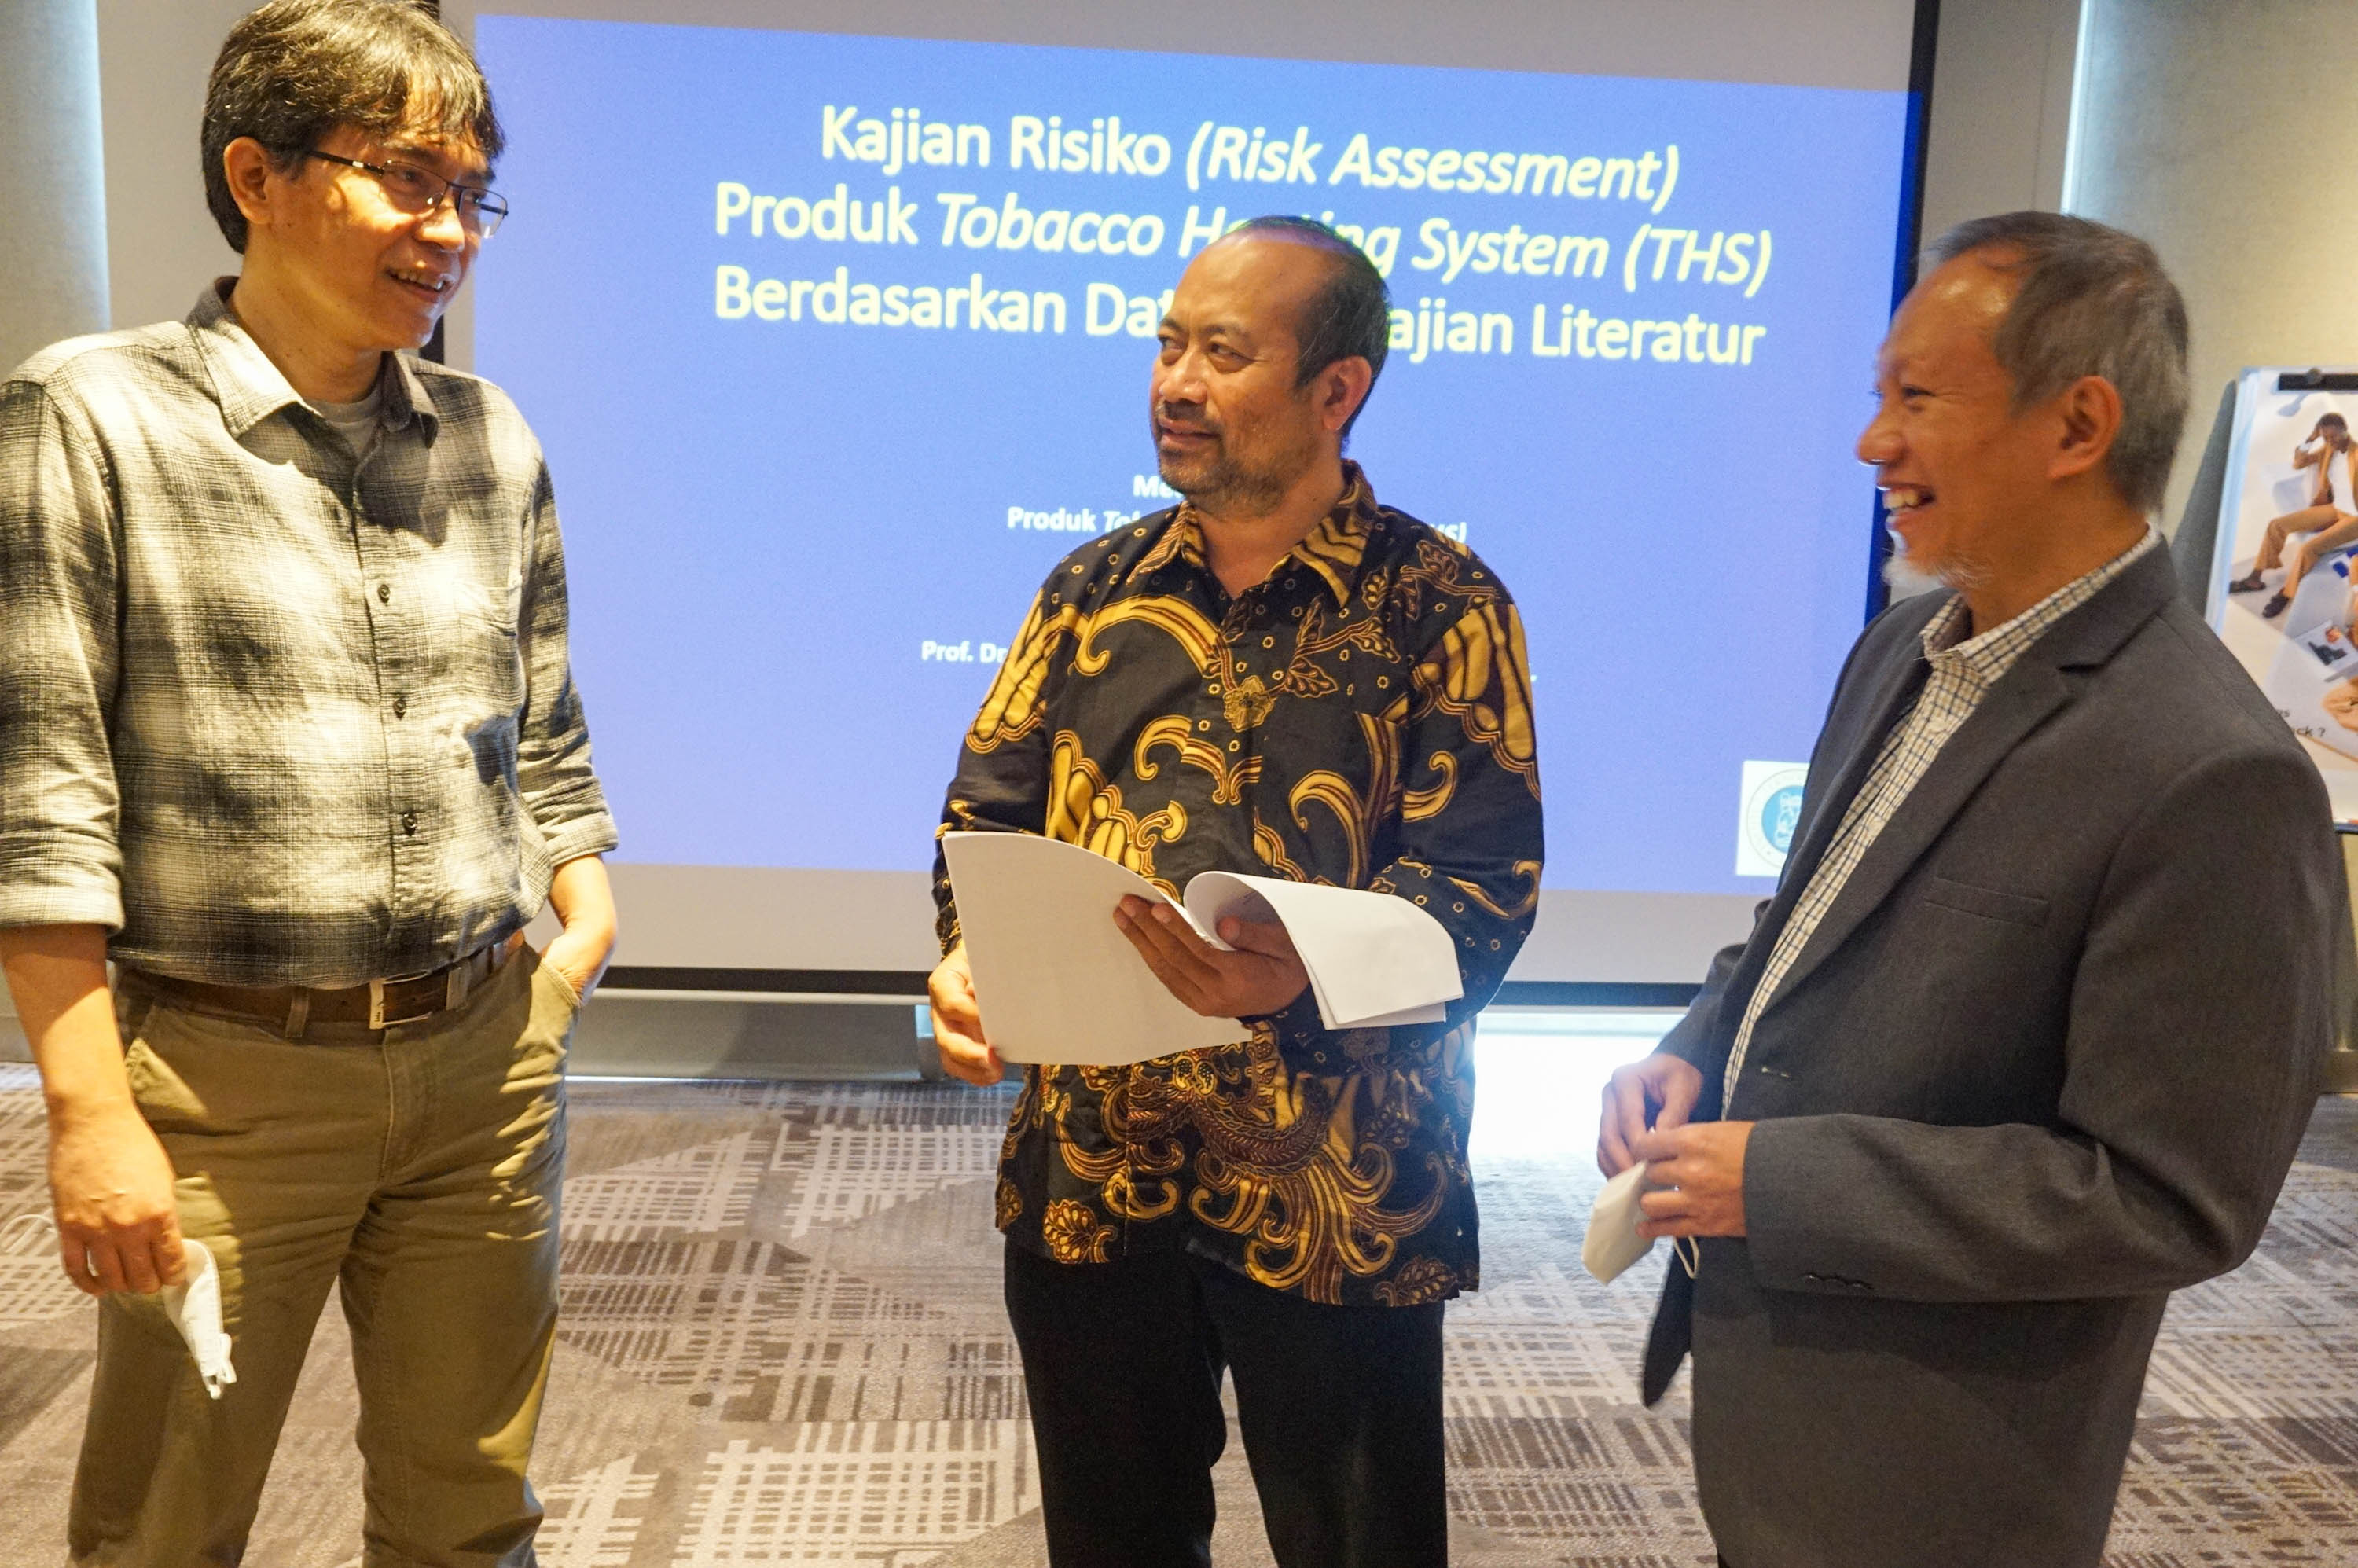 Tim Peneliti dari Sekolah Farmasi Institut Teknologi Bandung (SF-ITB), Rahmana Emran Kartasasmita (tengah), Daryono Hadi Tjahjono (kanan), dan Kusnandar Anggadireja (kiri) berbincang usai memaparkan hasil kajian literatur ilmiah dari SF-ITB yang berjudul “Kajian Risiko (Risk Assessment) Produk Tobacco Heated System (THS) Berdasarkan Data dan Kajian Literatur" dalam diskusi media terbatas di Jakarta, Rabu, 8 Juni 2022. Foto: Ismail Pohan/TrenAsia